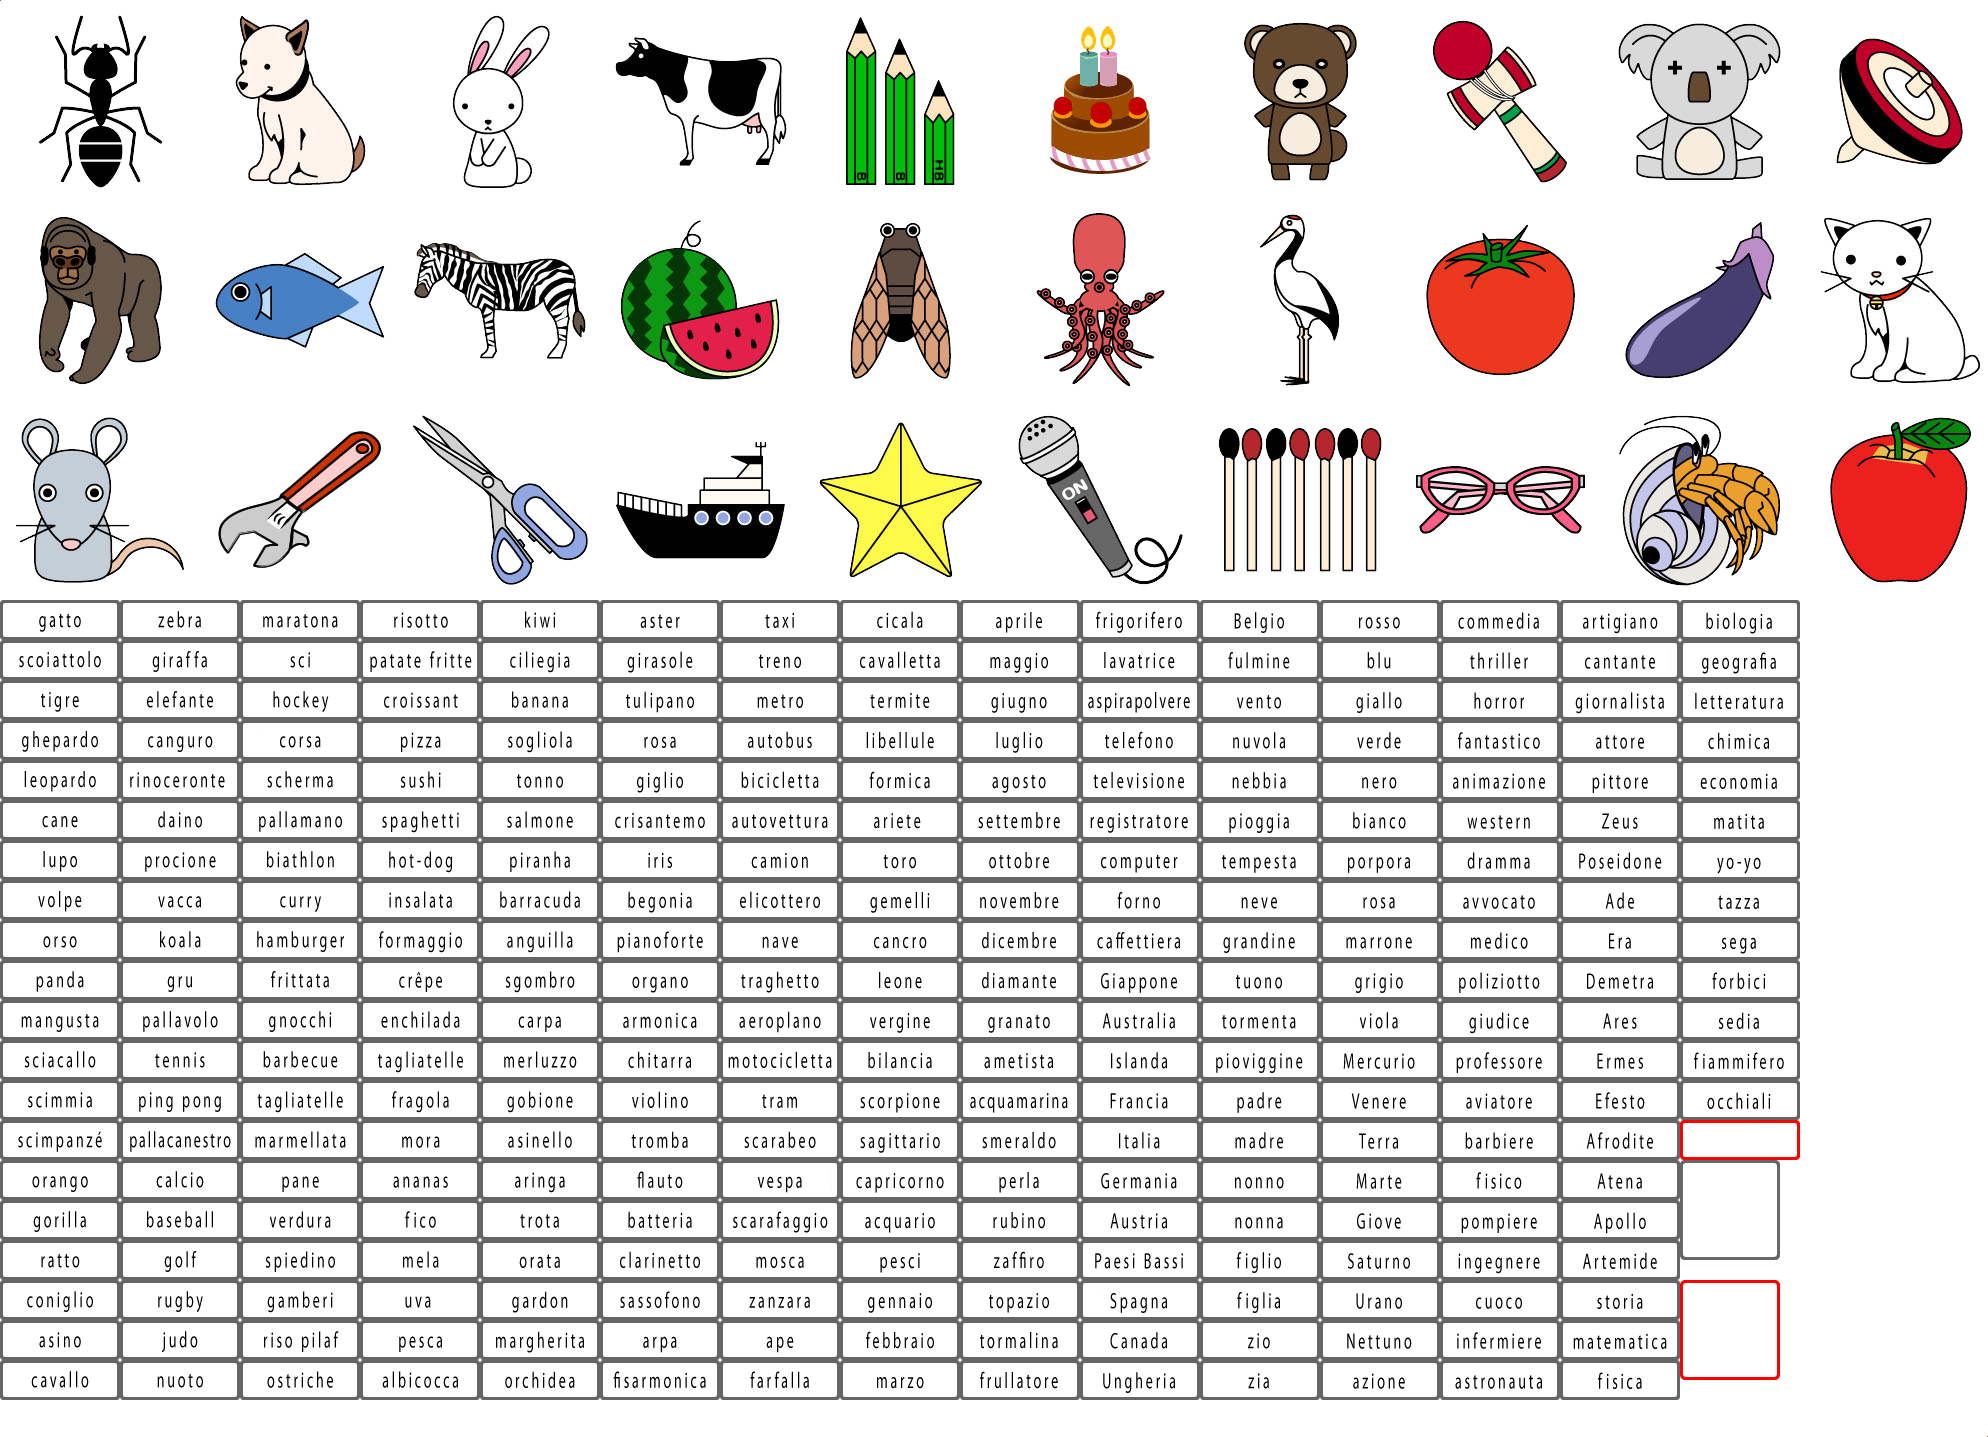 Objects (Category I)